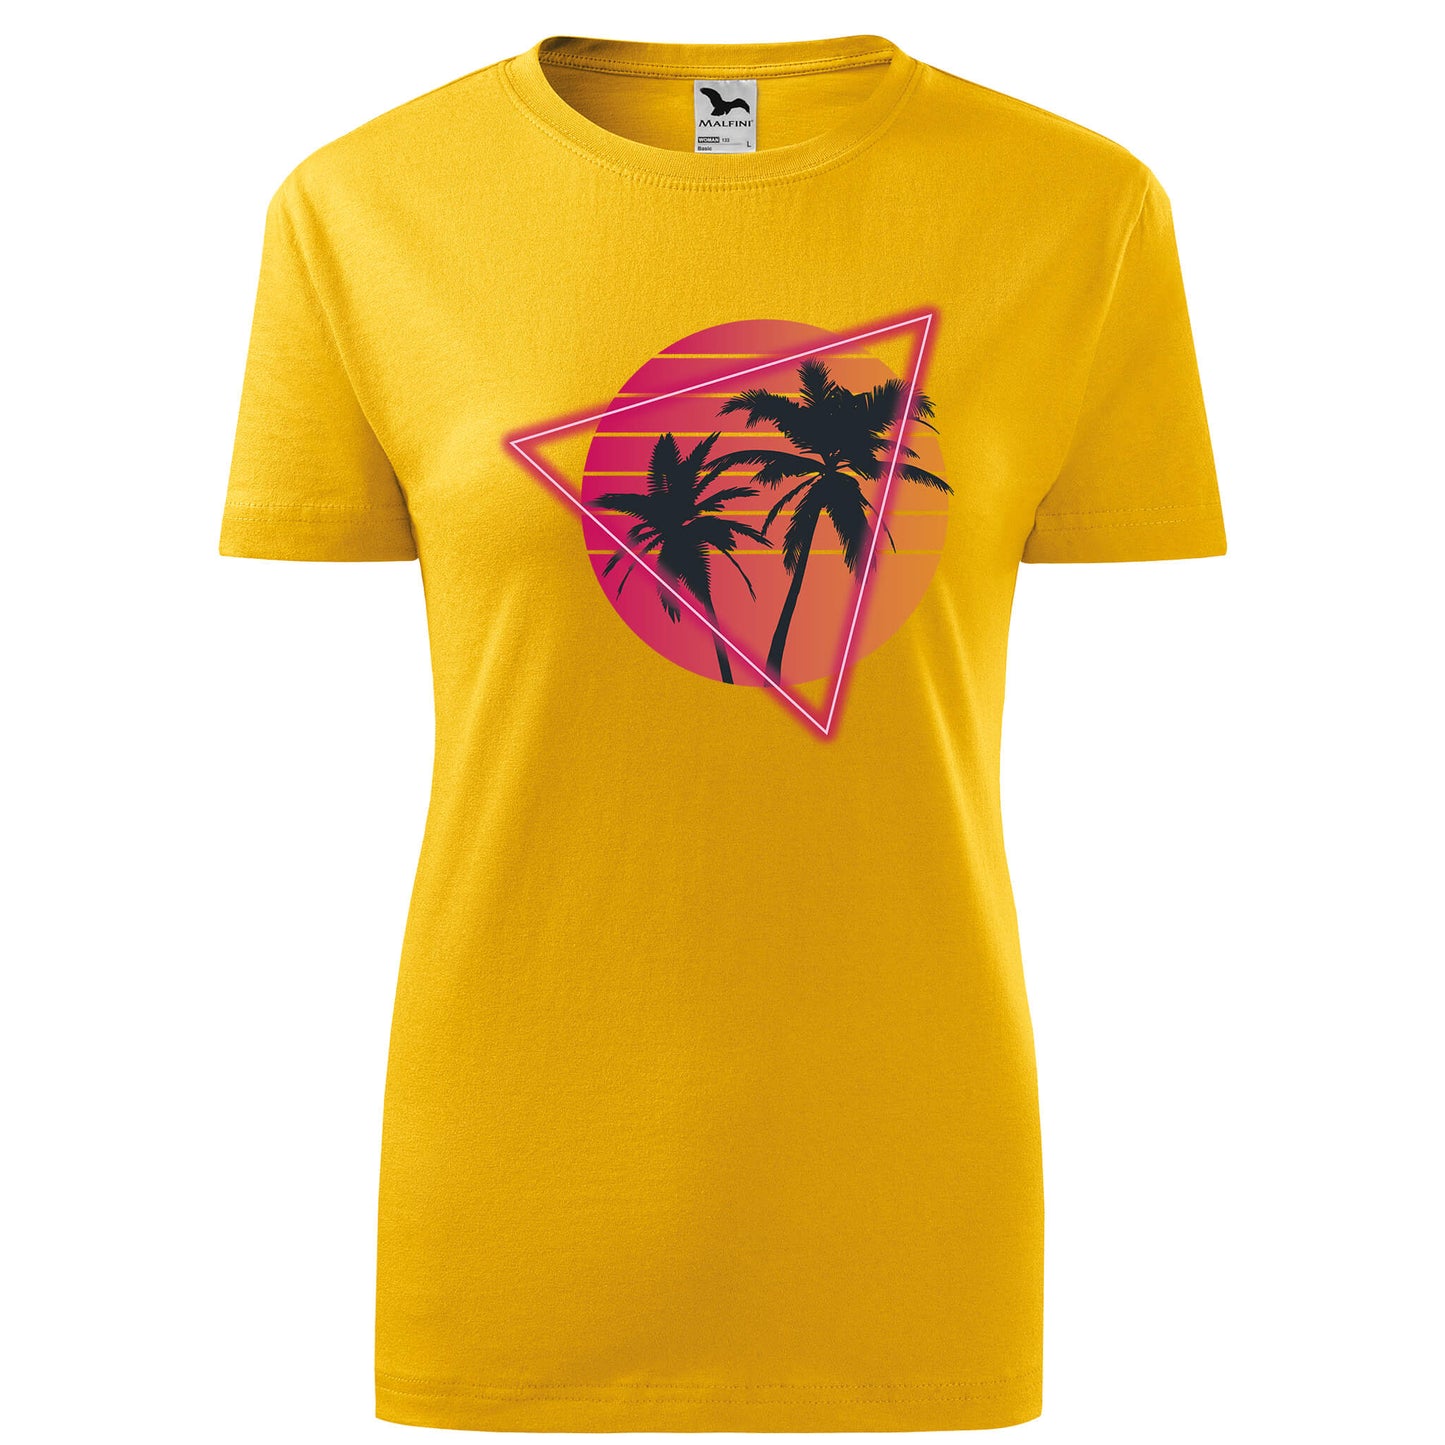 Sunset vaporwave t-shirt - rvdesignprint